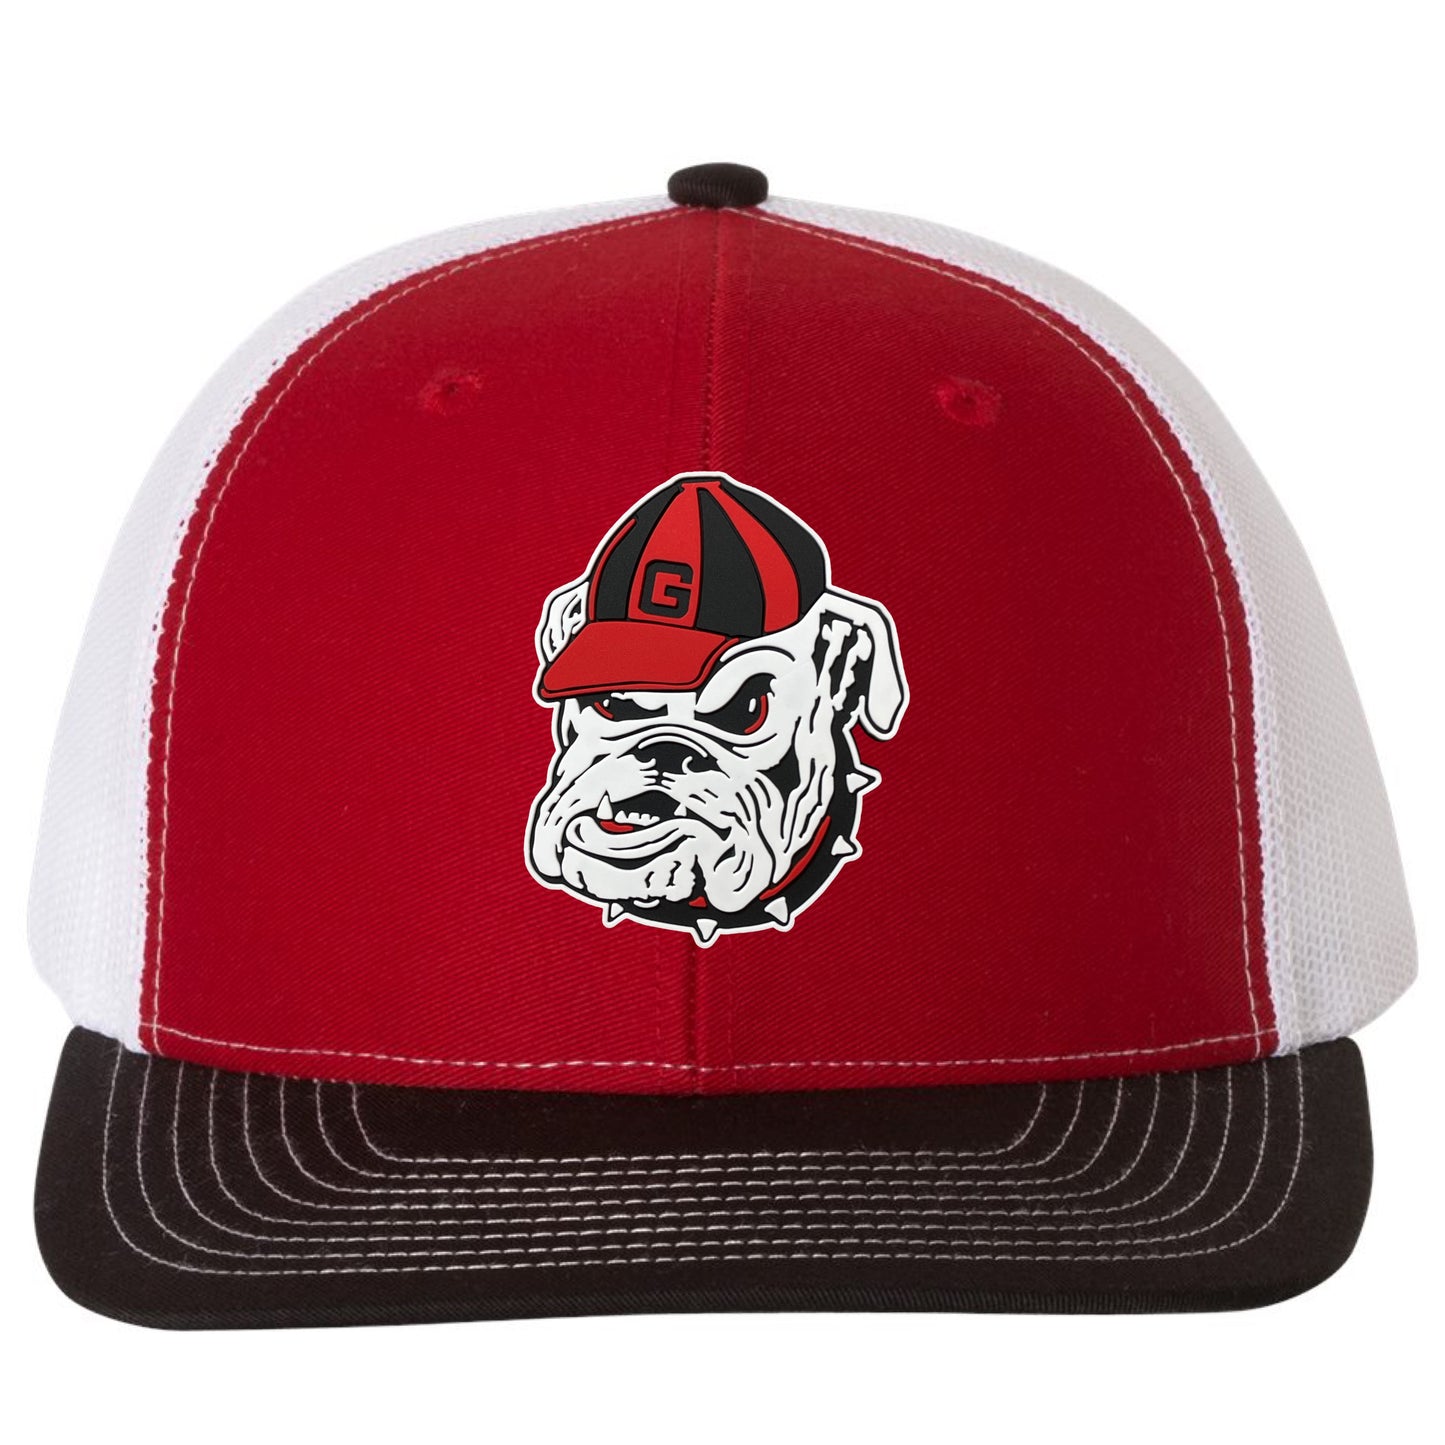 Georgia Bulldogs Vintage 3D Logo Snapback Trucker Hat- Red/ White/ Black - Ten Gallon Hat Co.